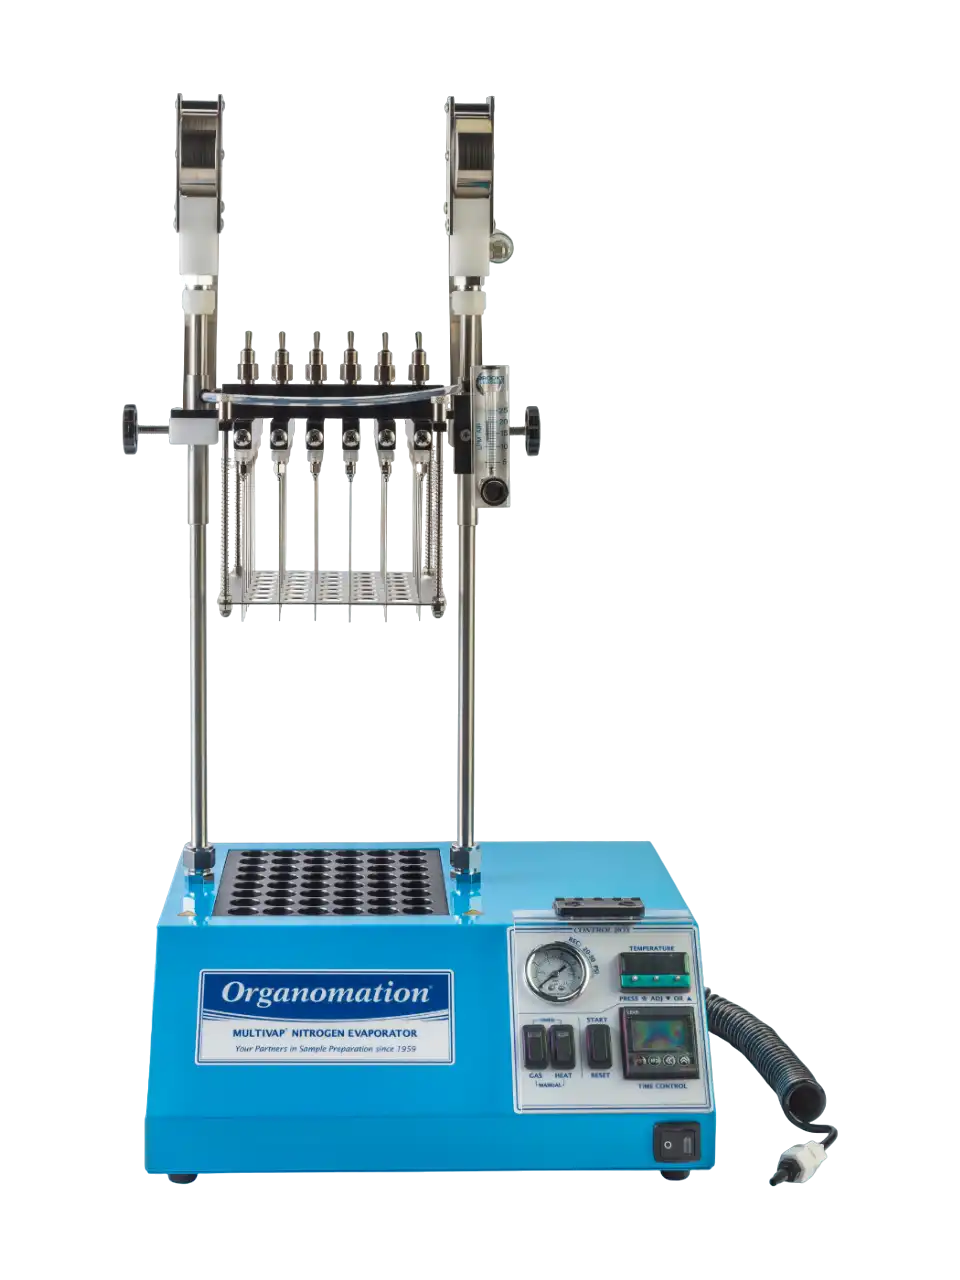 Nitrogen Evaporator, MULTIVAP Series, Acid Resistant Coating, with Dry Block Heater (30-120°C and 900 W), Digital Control, 48 Sample Positions